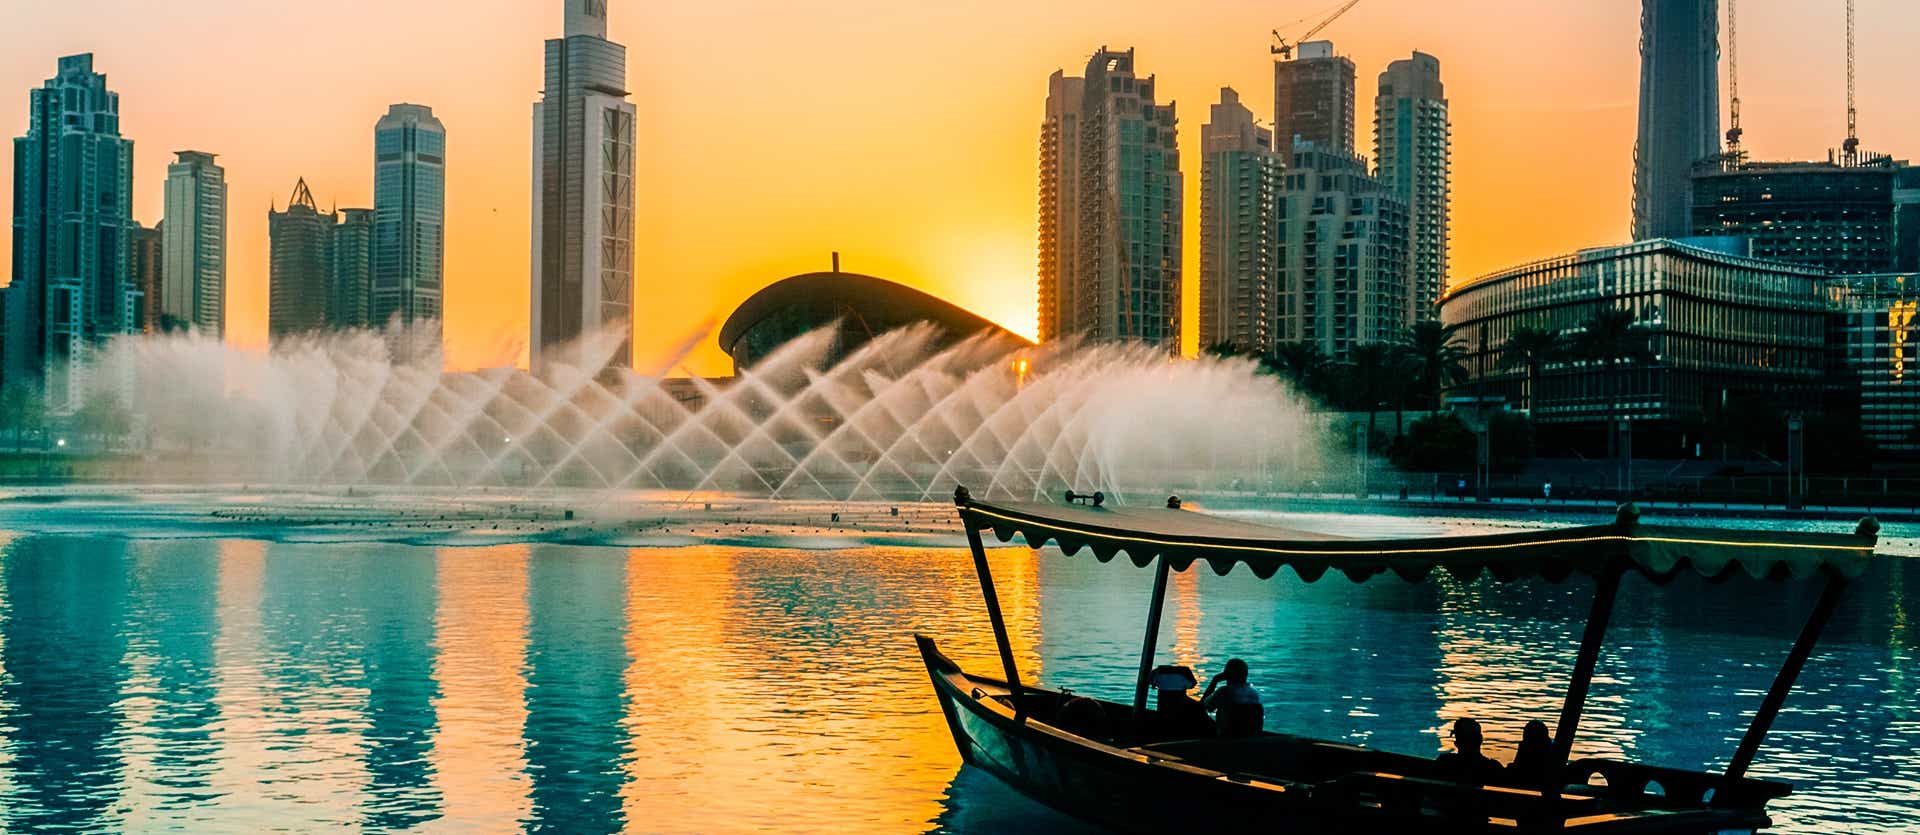 Dubai Fountain <span class="iconos separador"></span> United Arab Emirates